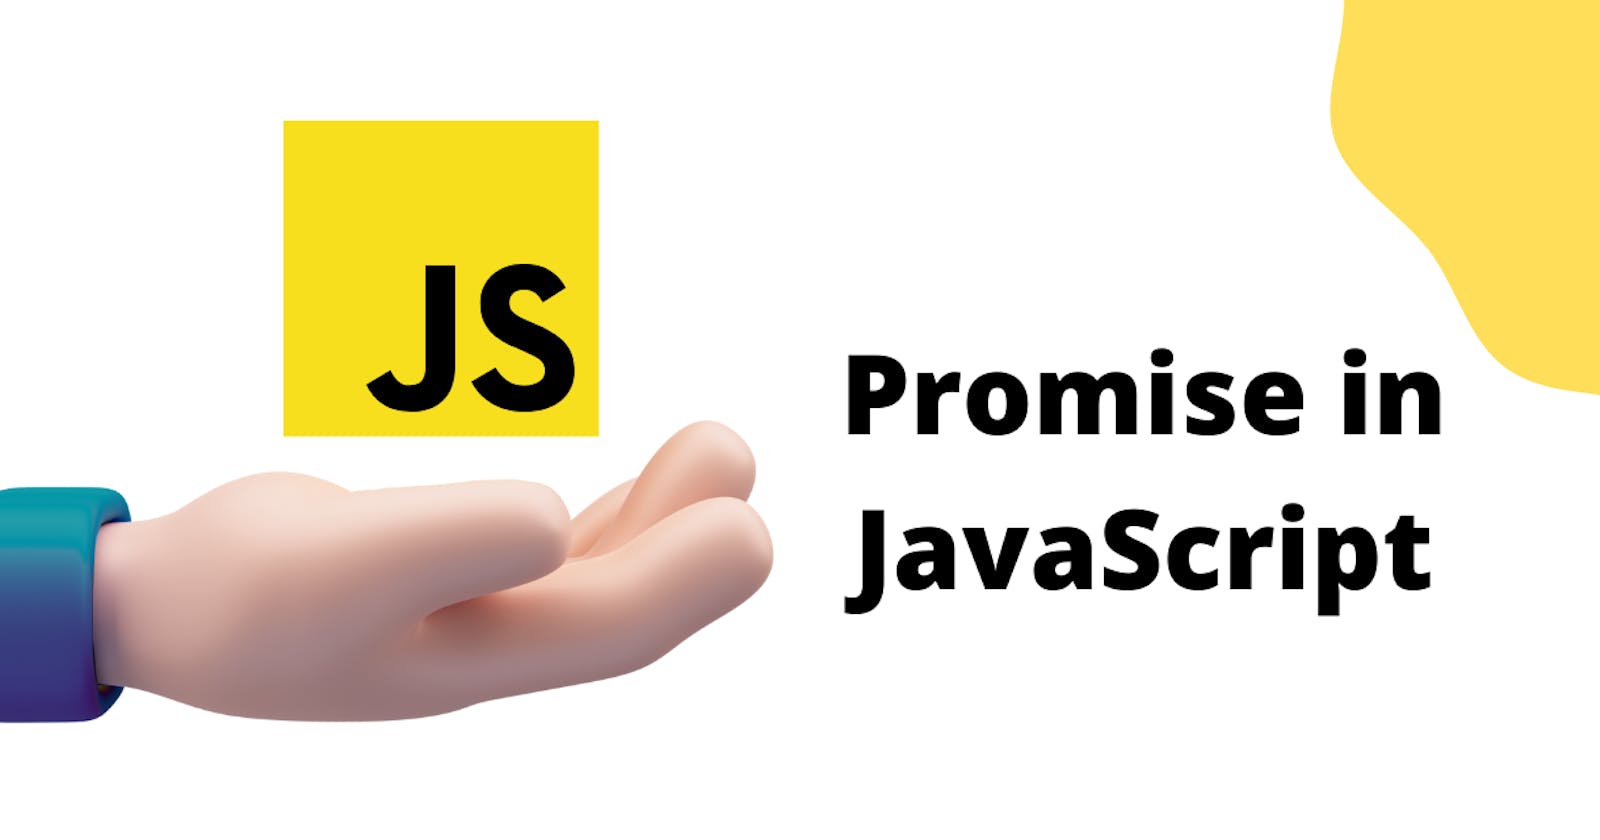 Promise in JavaScript simplified!